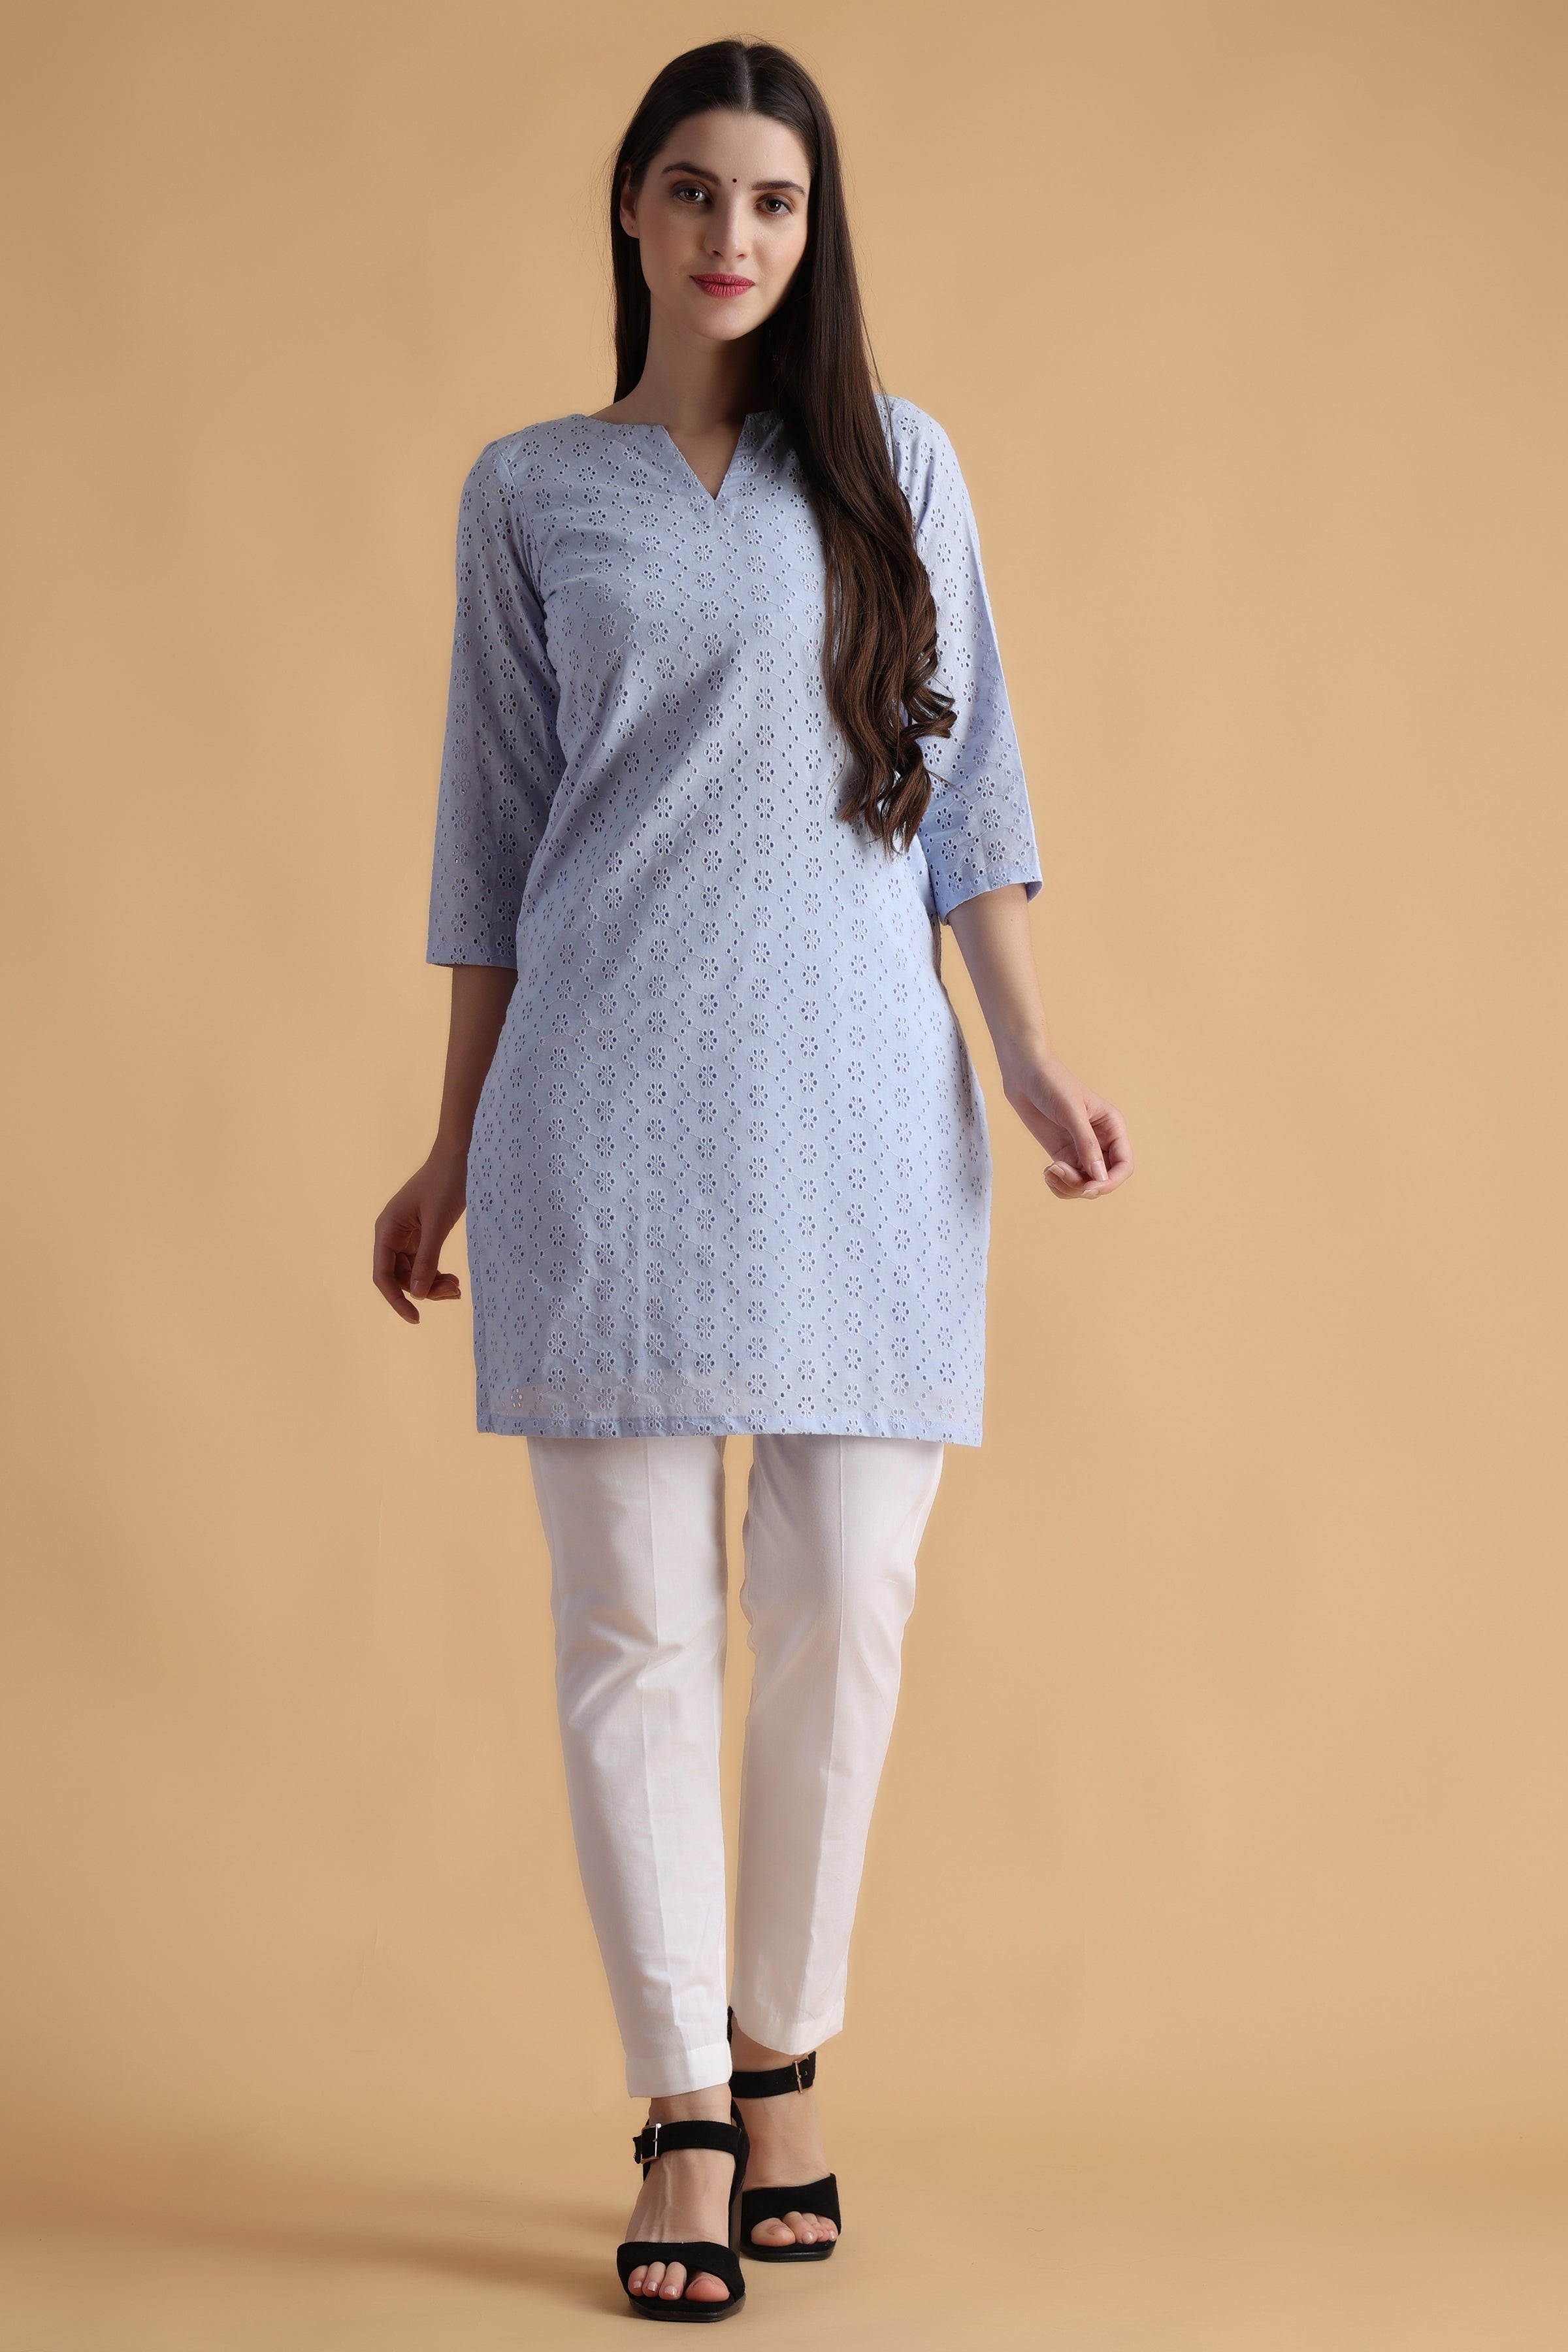 Stylish White Cotton Flex Short Kurti Top for Girls/Women